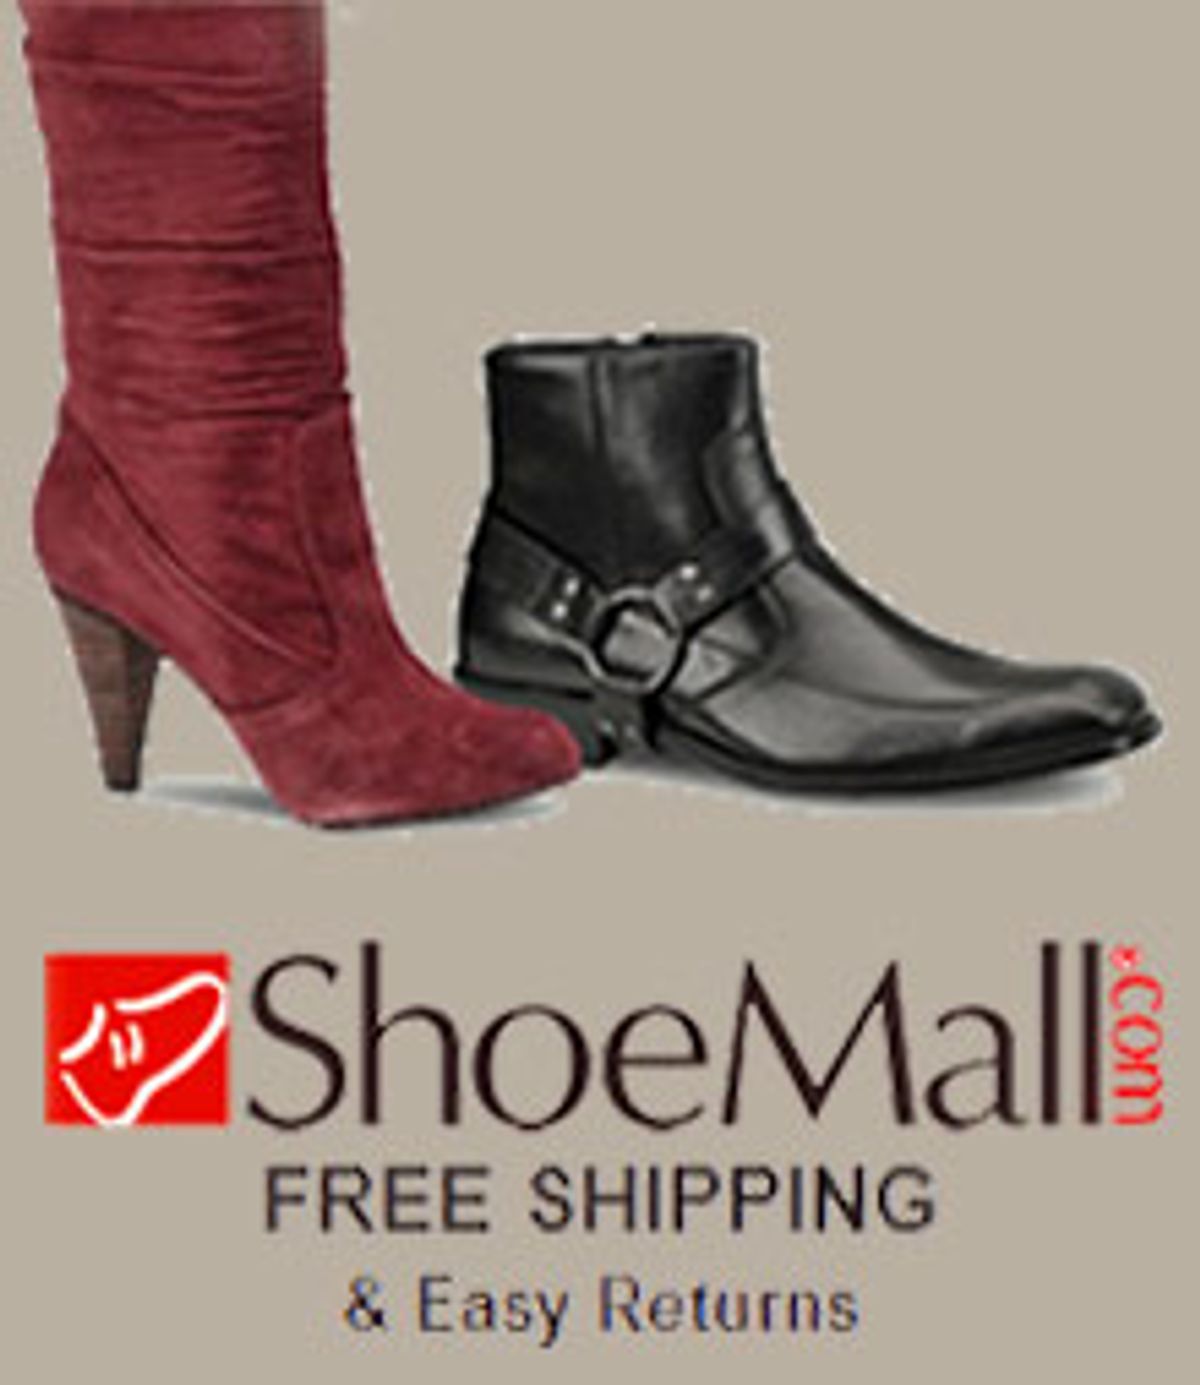 shoemall promo